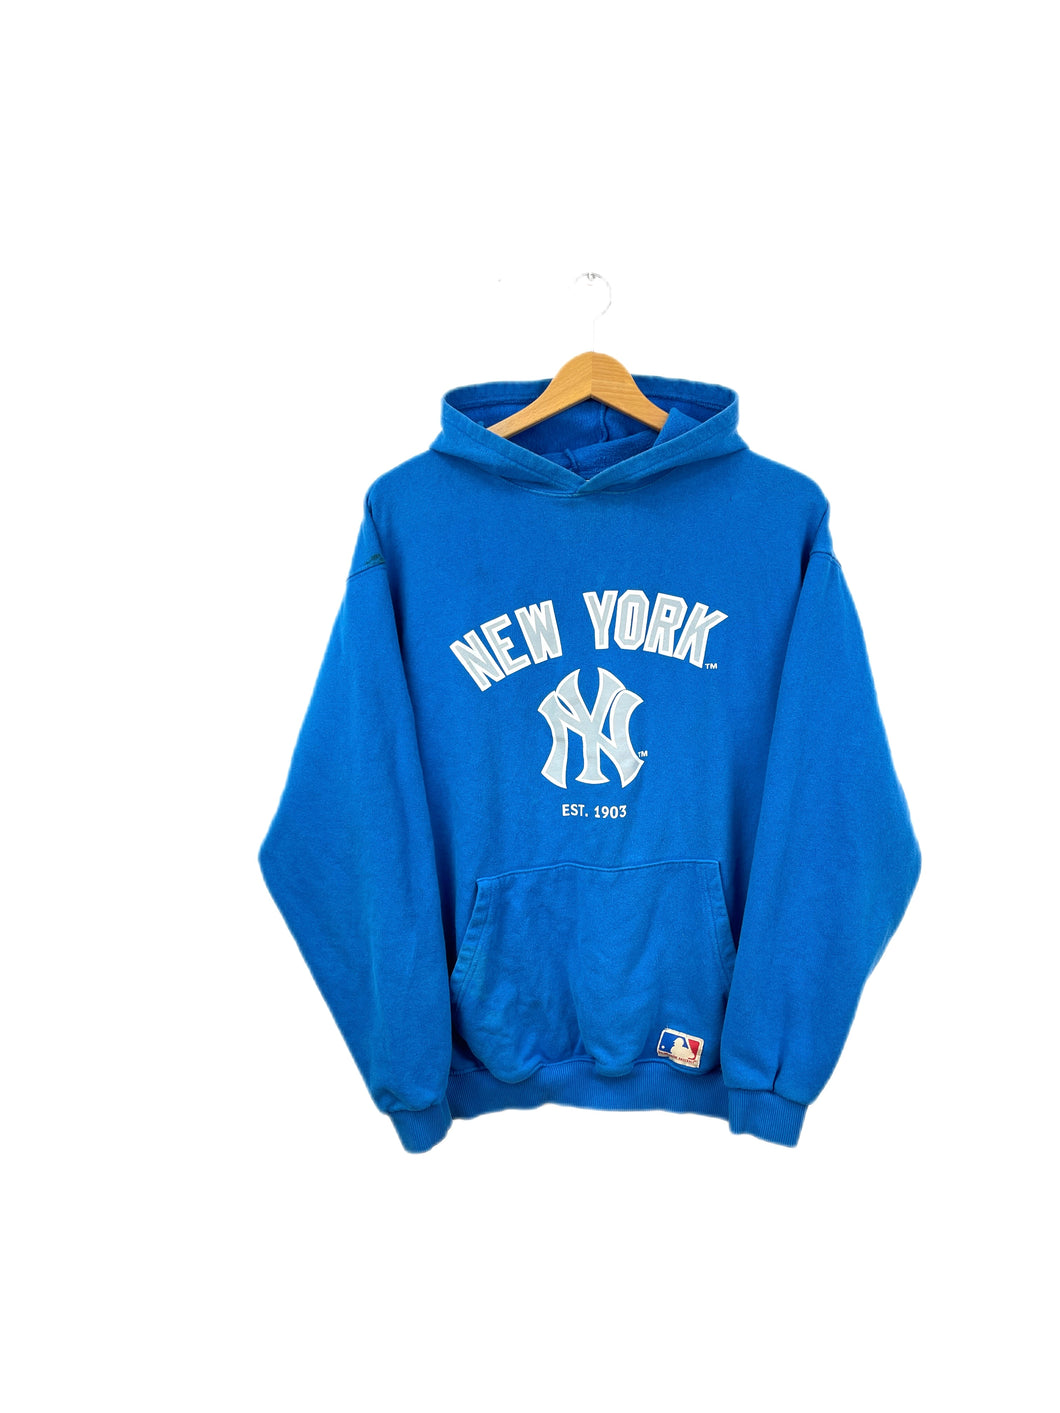 MLB New York Yankees Sweatshirt - Medium